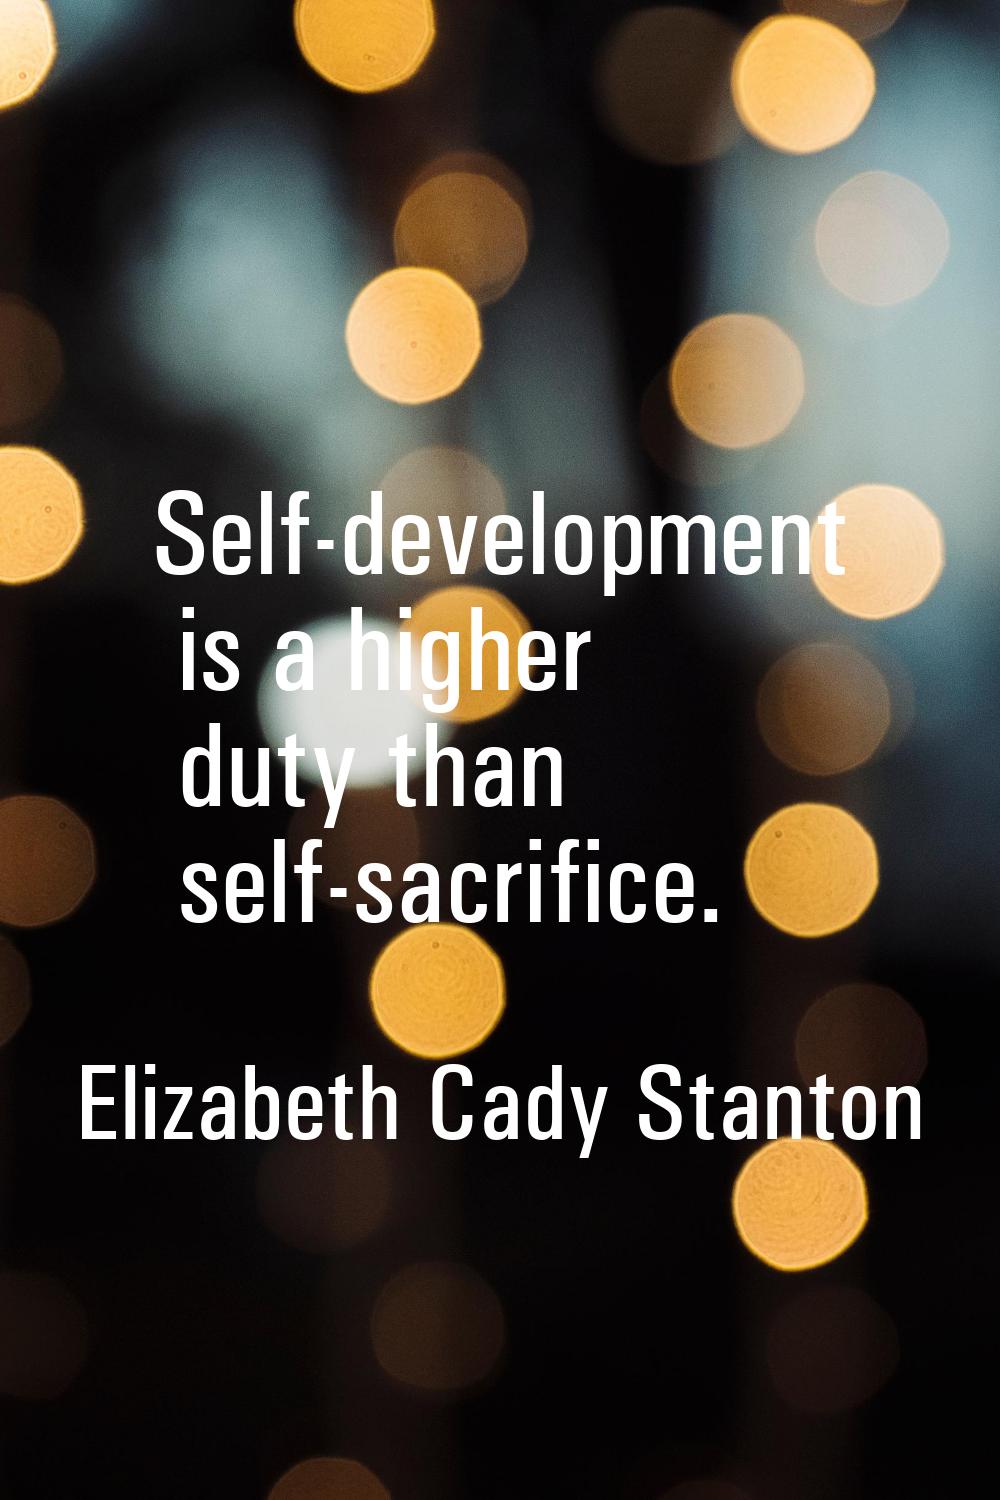 Self-development is a higher duty than self-sacrifice.